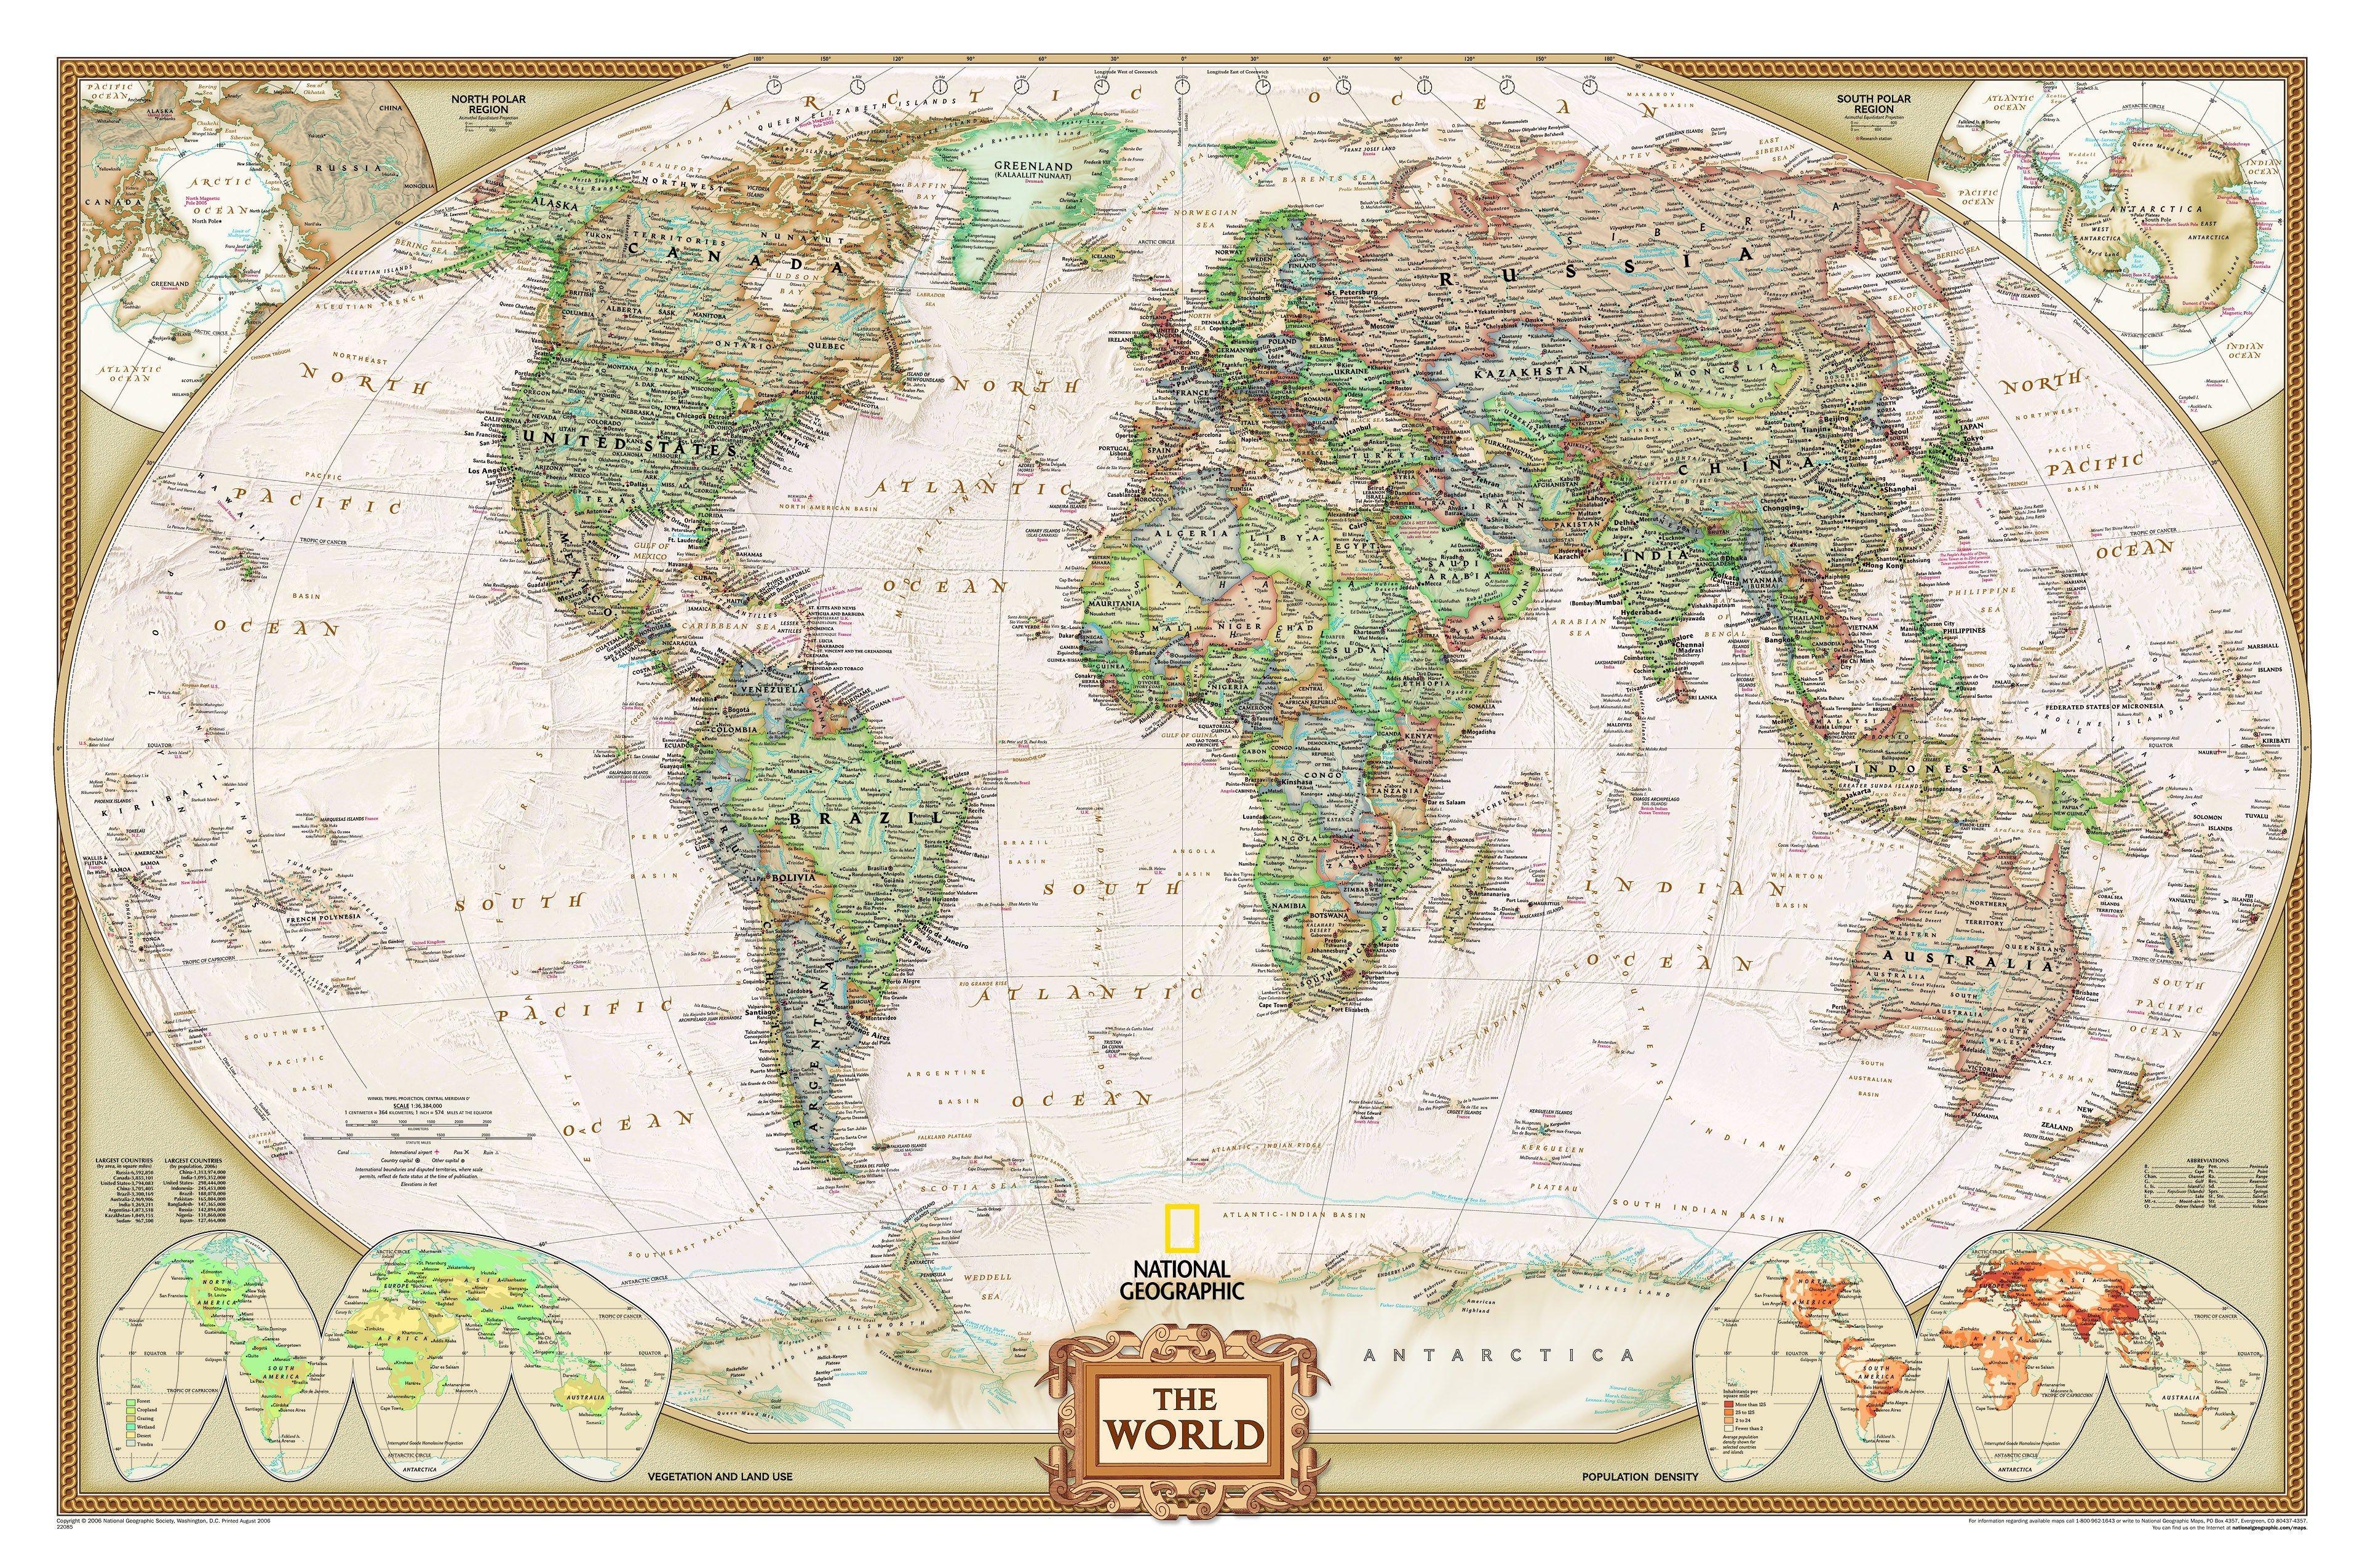 vintage world map